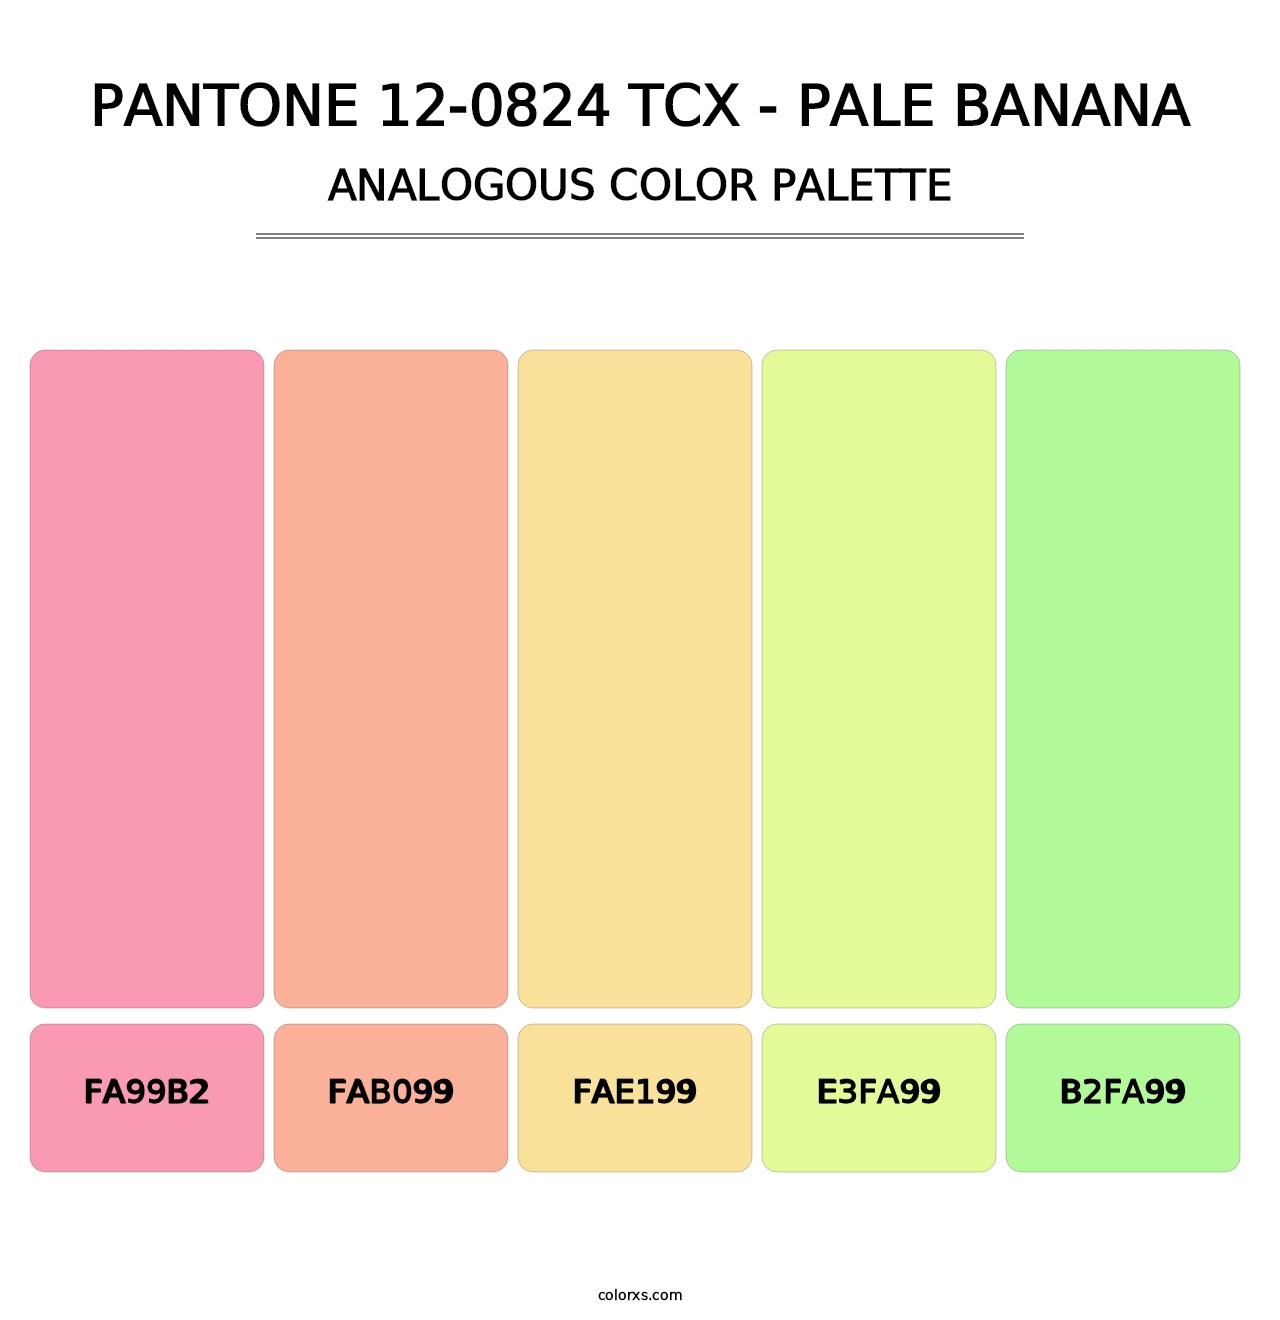 PANTONE 12-0824 TCX - Pale Banana - Analogous Color Palette